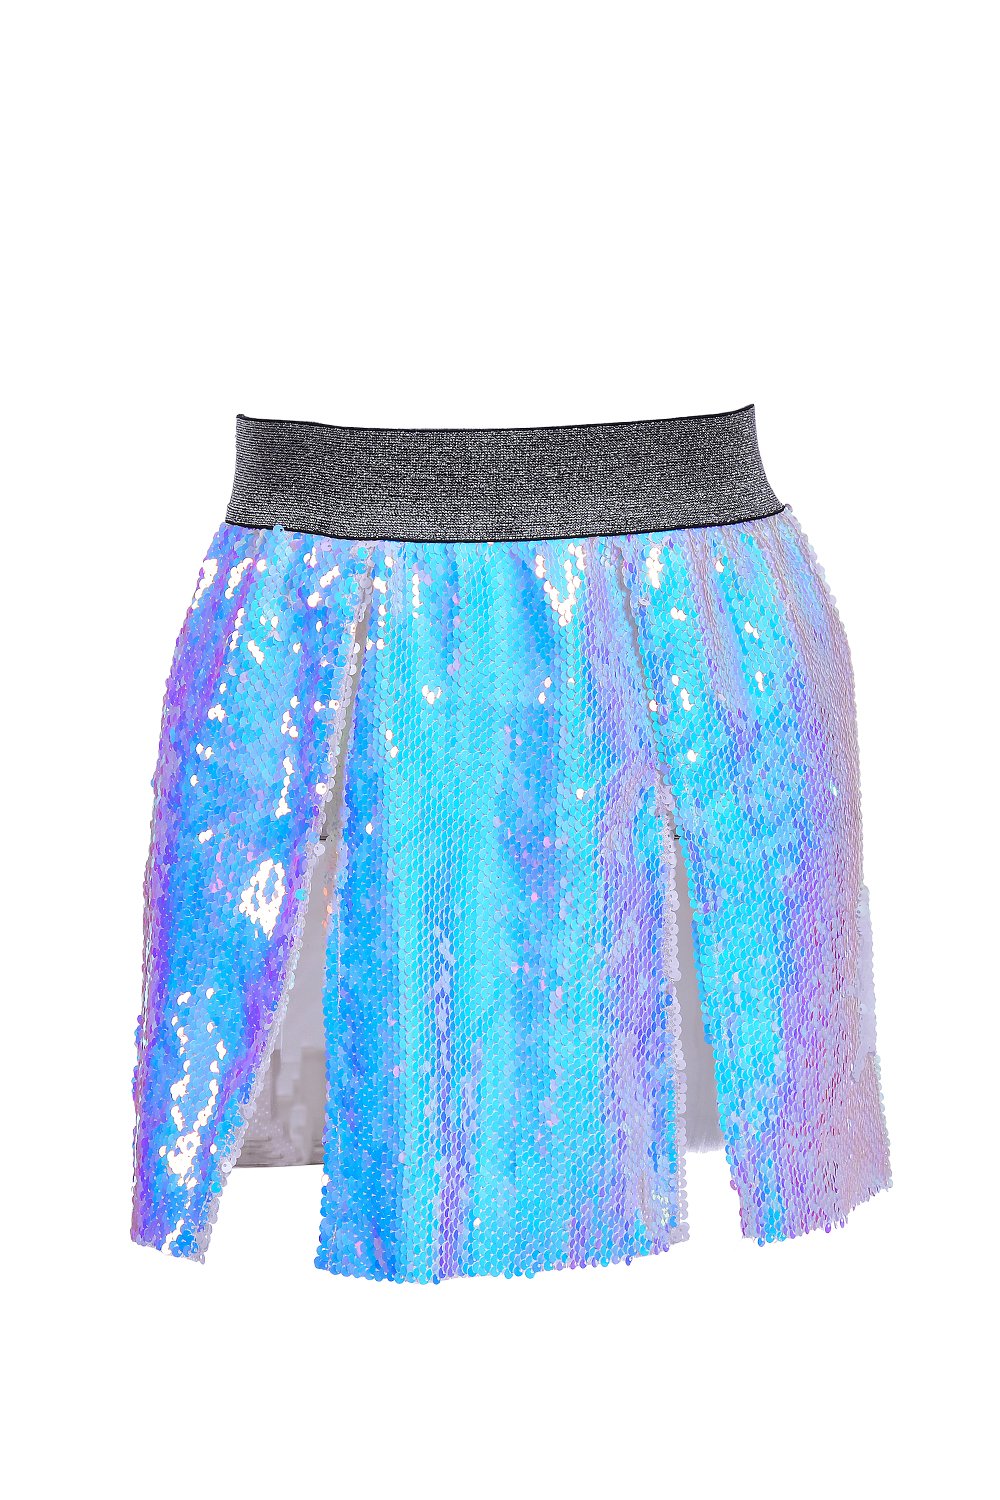 Cosmic Girl Open Front Skirt Sequin Set